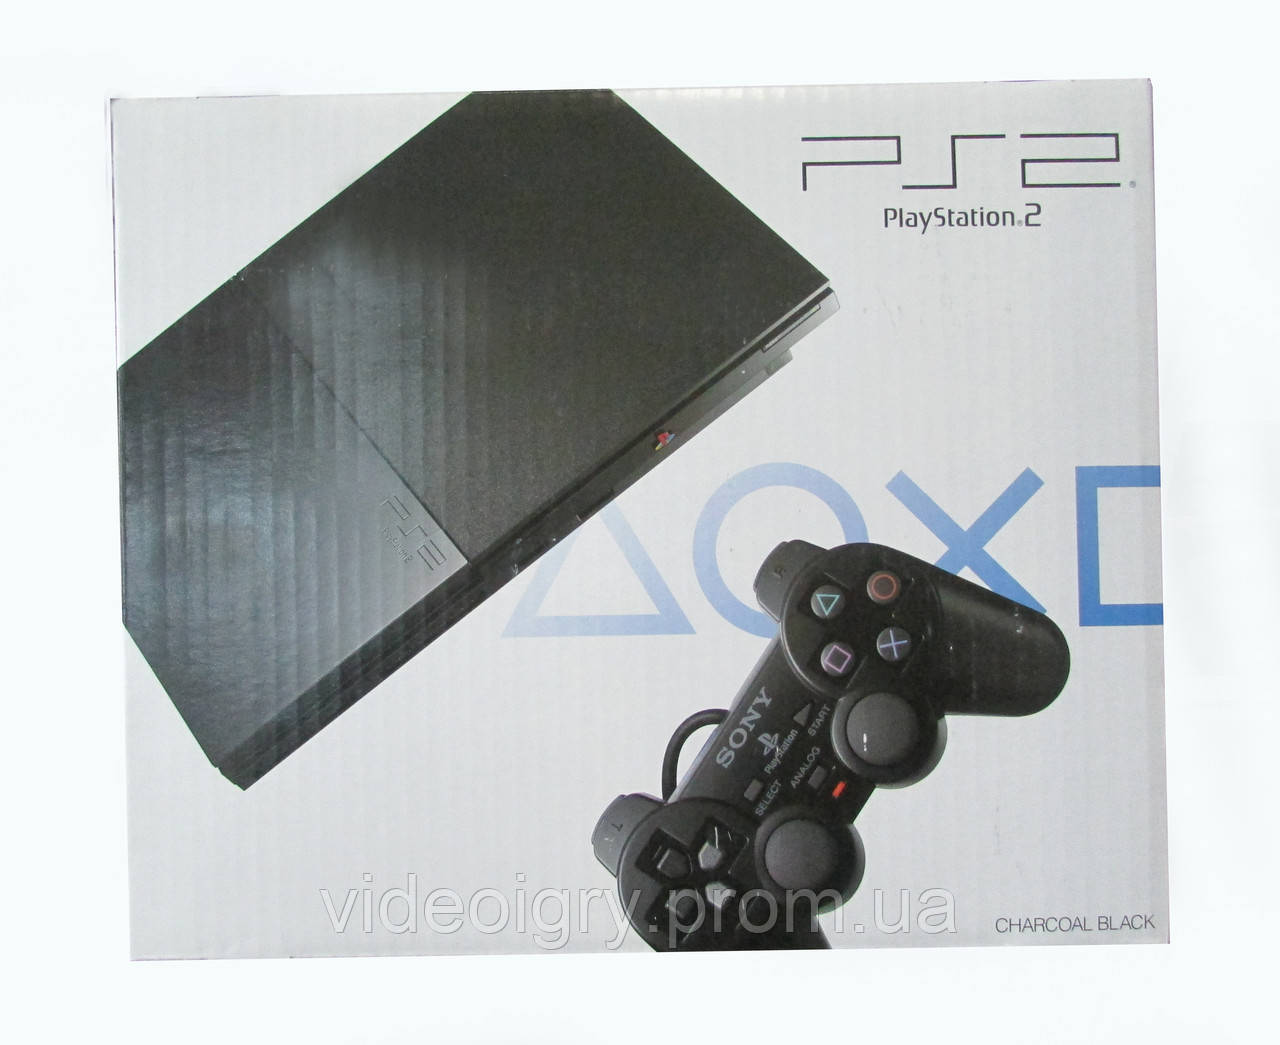 Sony PlayStation 2 SCPH-90004 slim (не чипованная): продажа, цена в